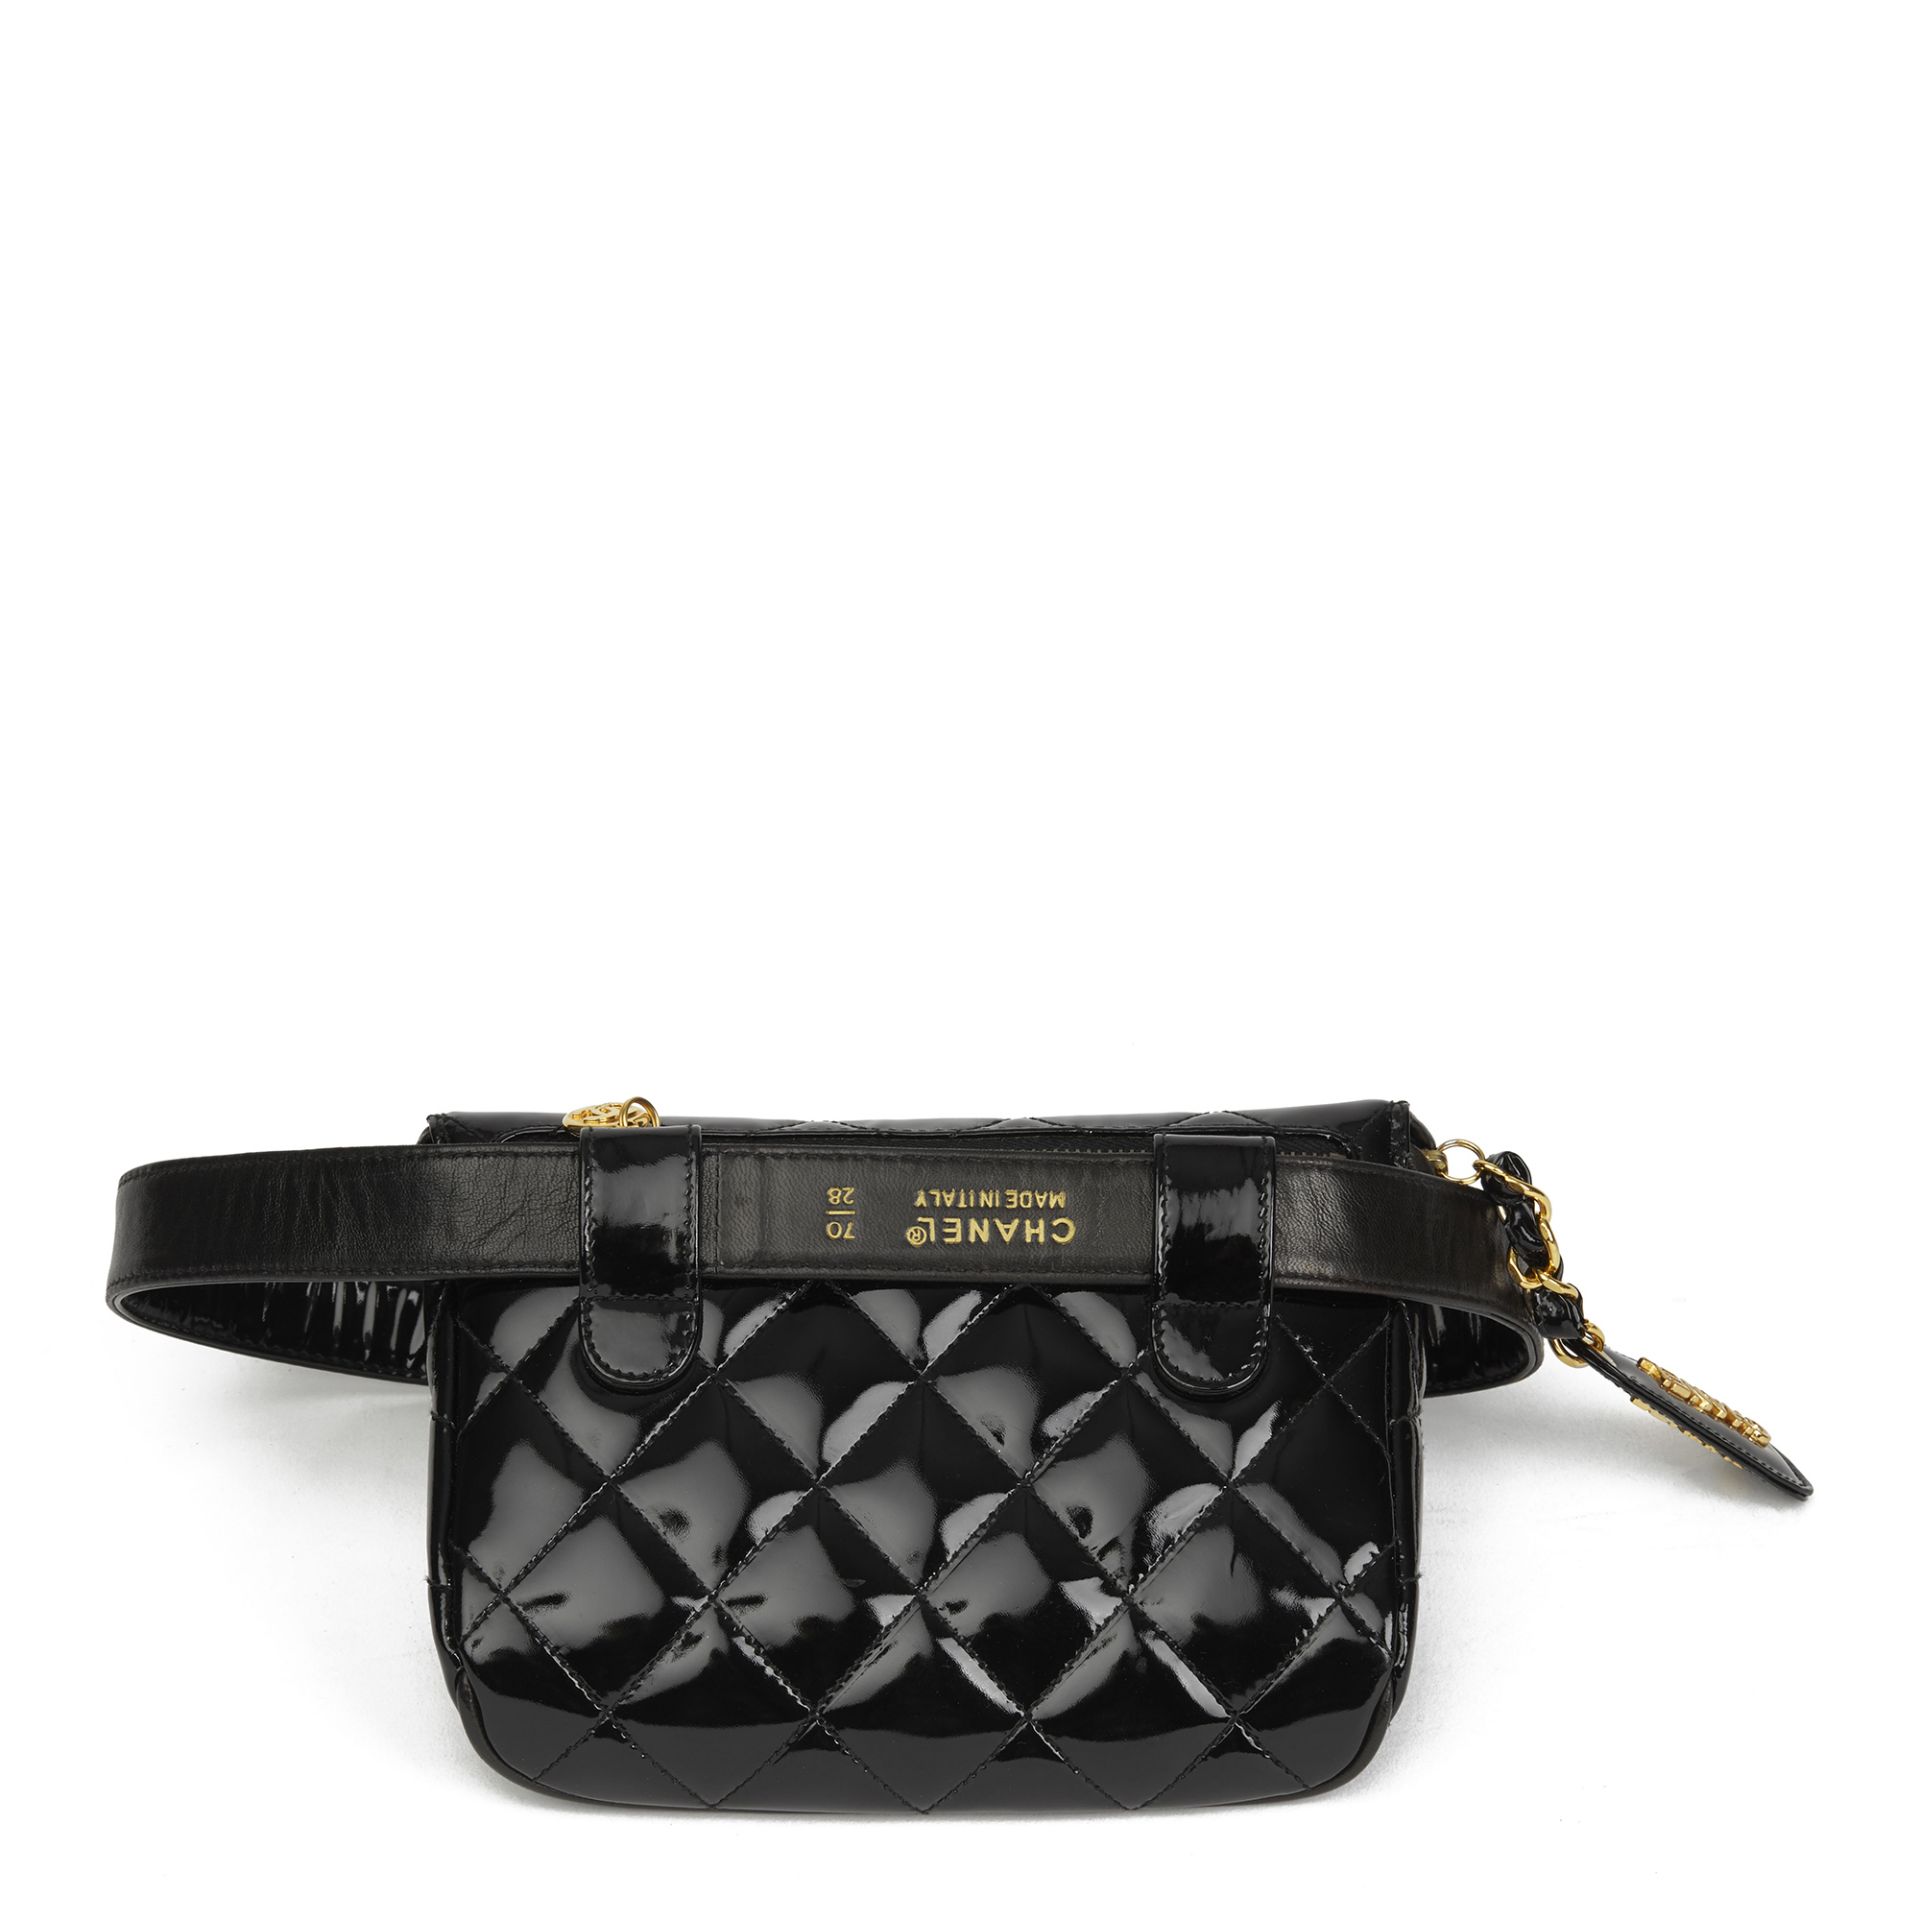 Chanel Black Quilted Patent Leather Vintage Timeless Belt Bag - Image 10 of 12